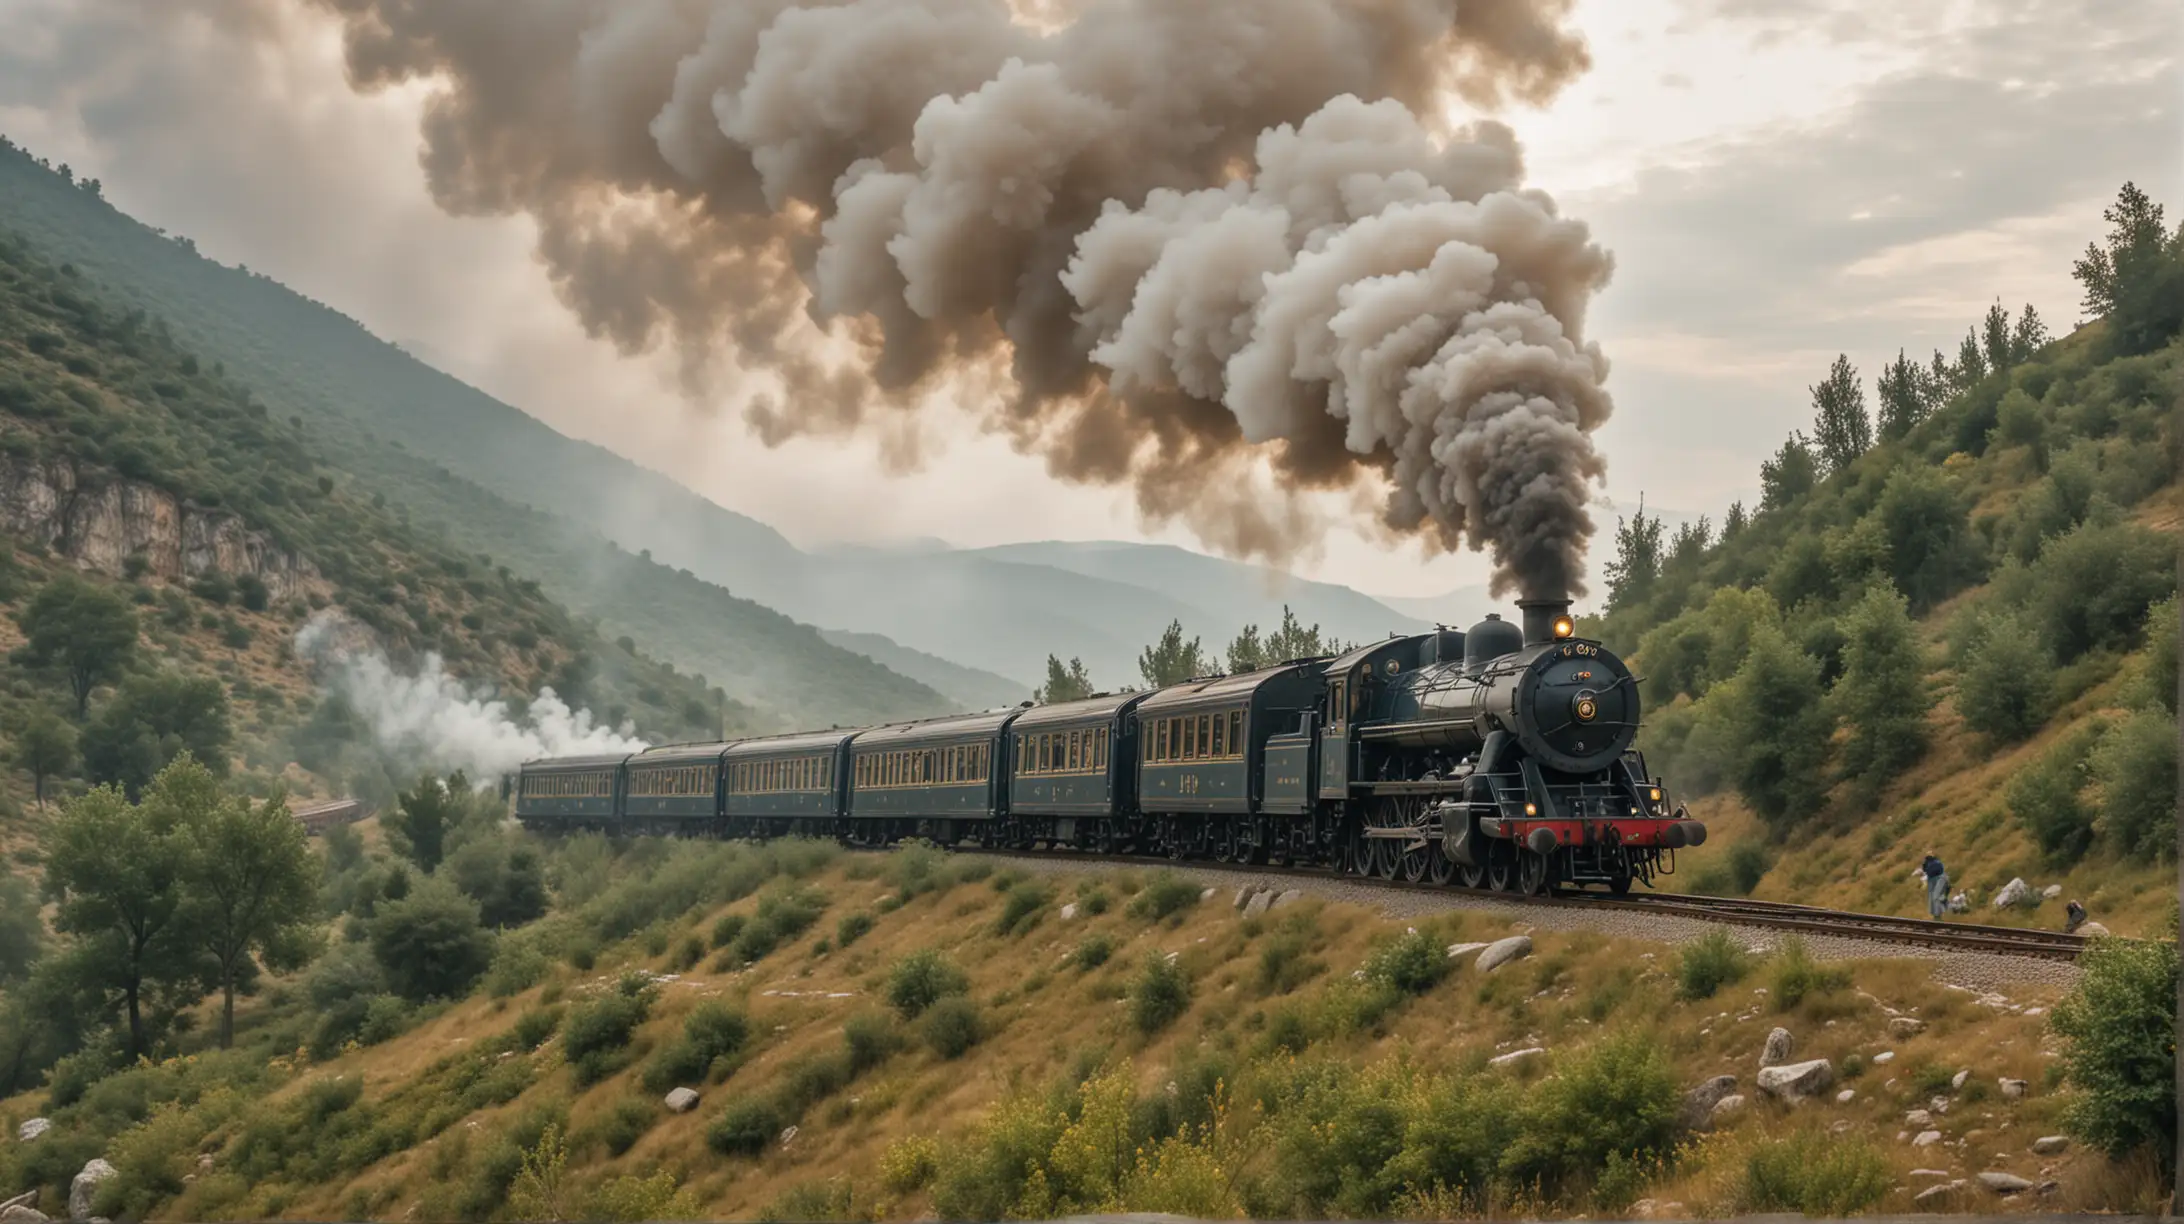 the original Orient Express runs through the wilderness in Turkey, cloudy, steam, smoke